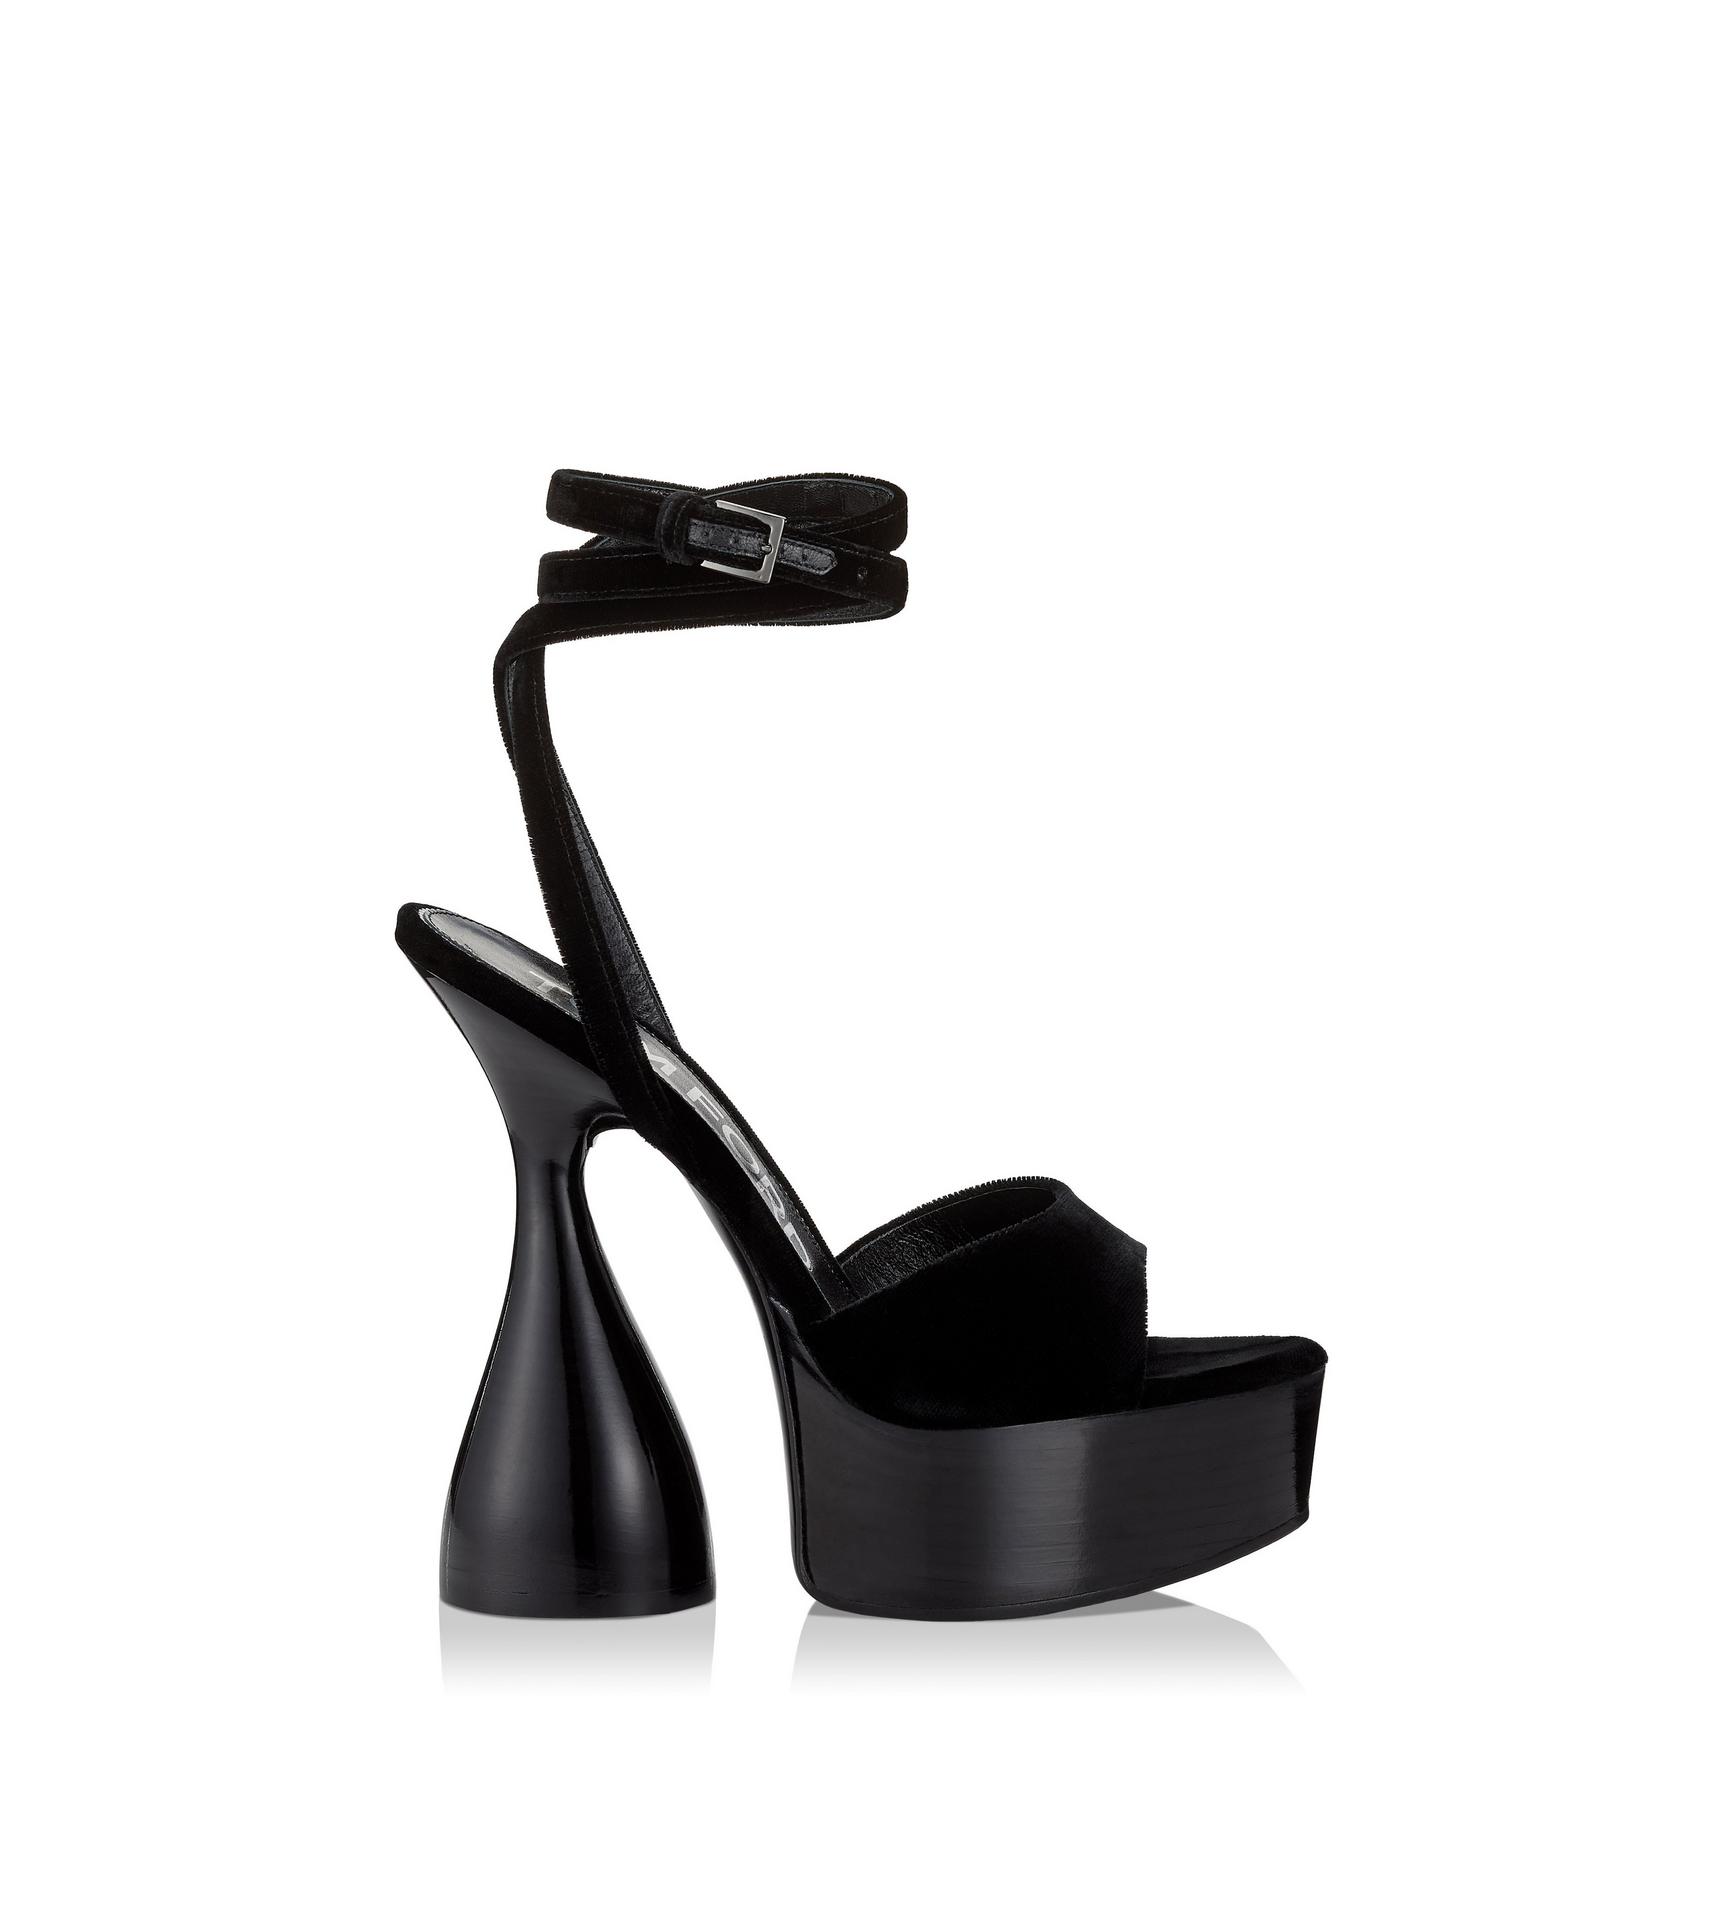 VELVET DISCO PLATFORM SANDAL 140 MM by TOM FORD, available on tomford.com for $1250 Kourtney Kardashian Shoes Exact Product 